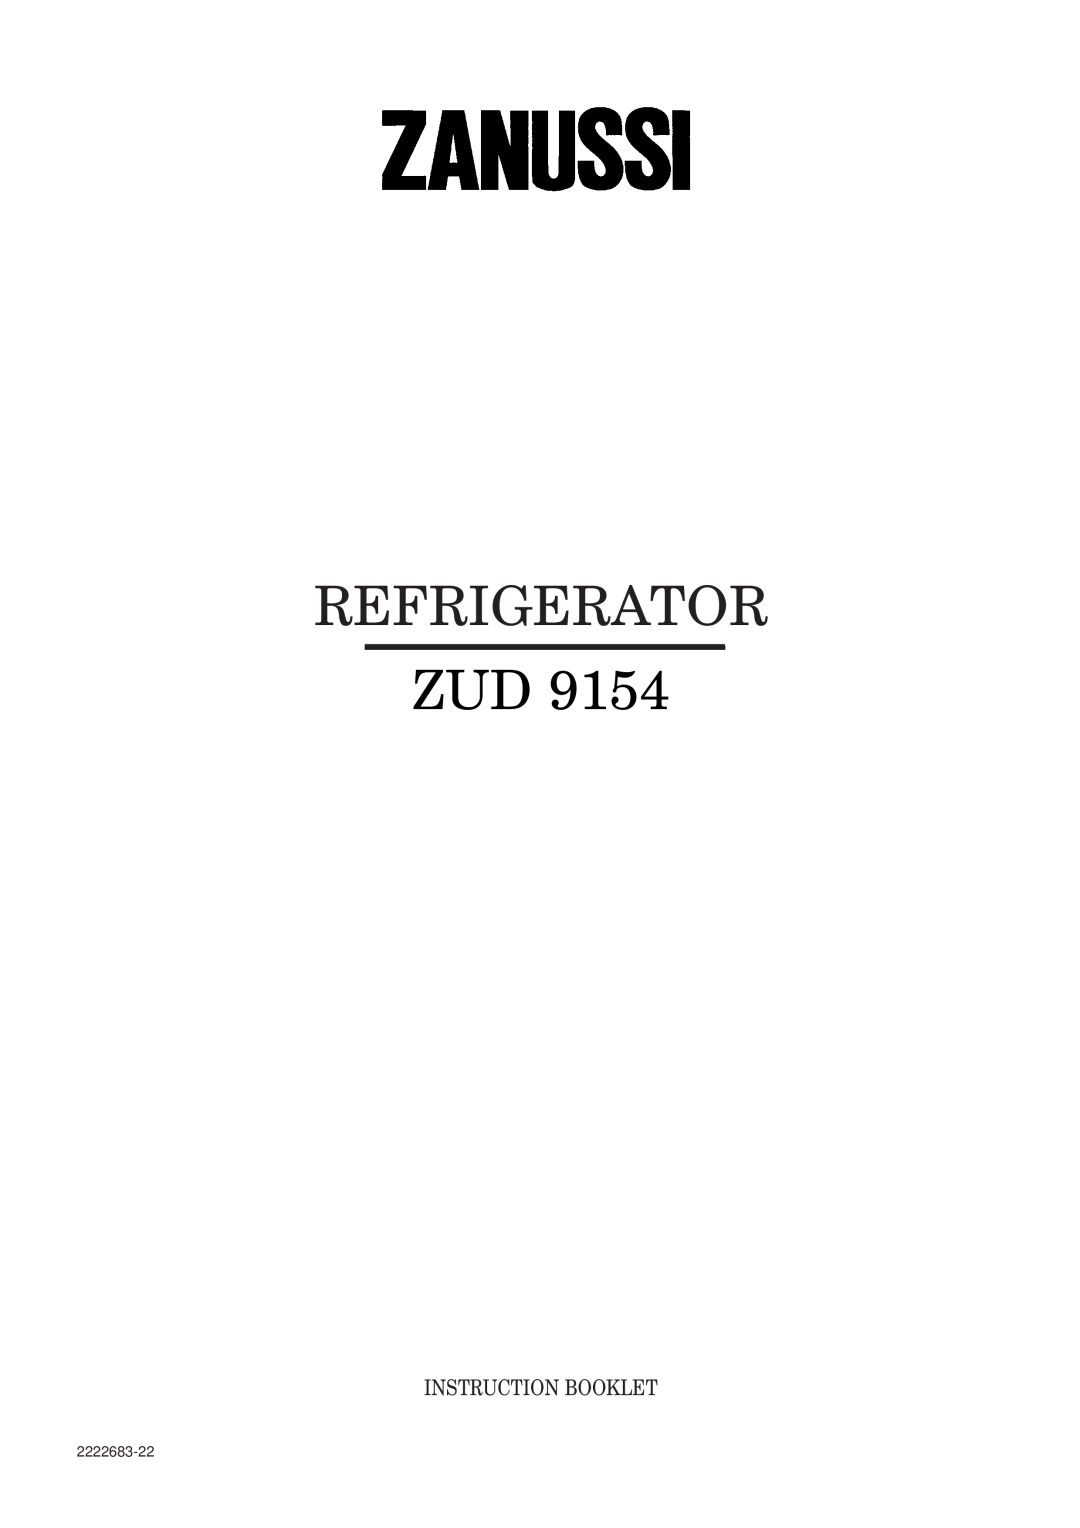 Zanussi ZUD 9154 manual Refrigerator, Instruction Booklet, 2222683-22 